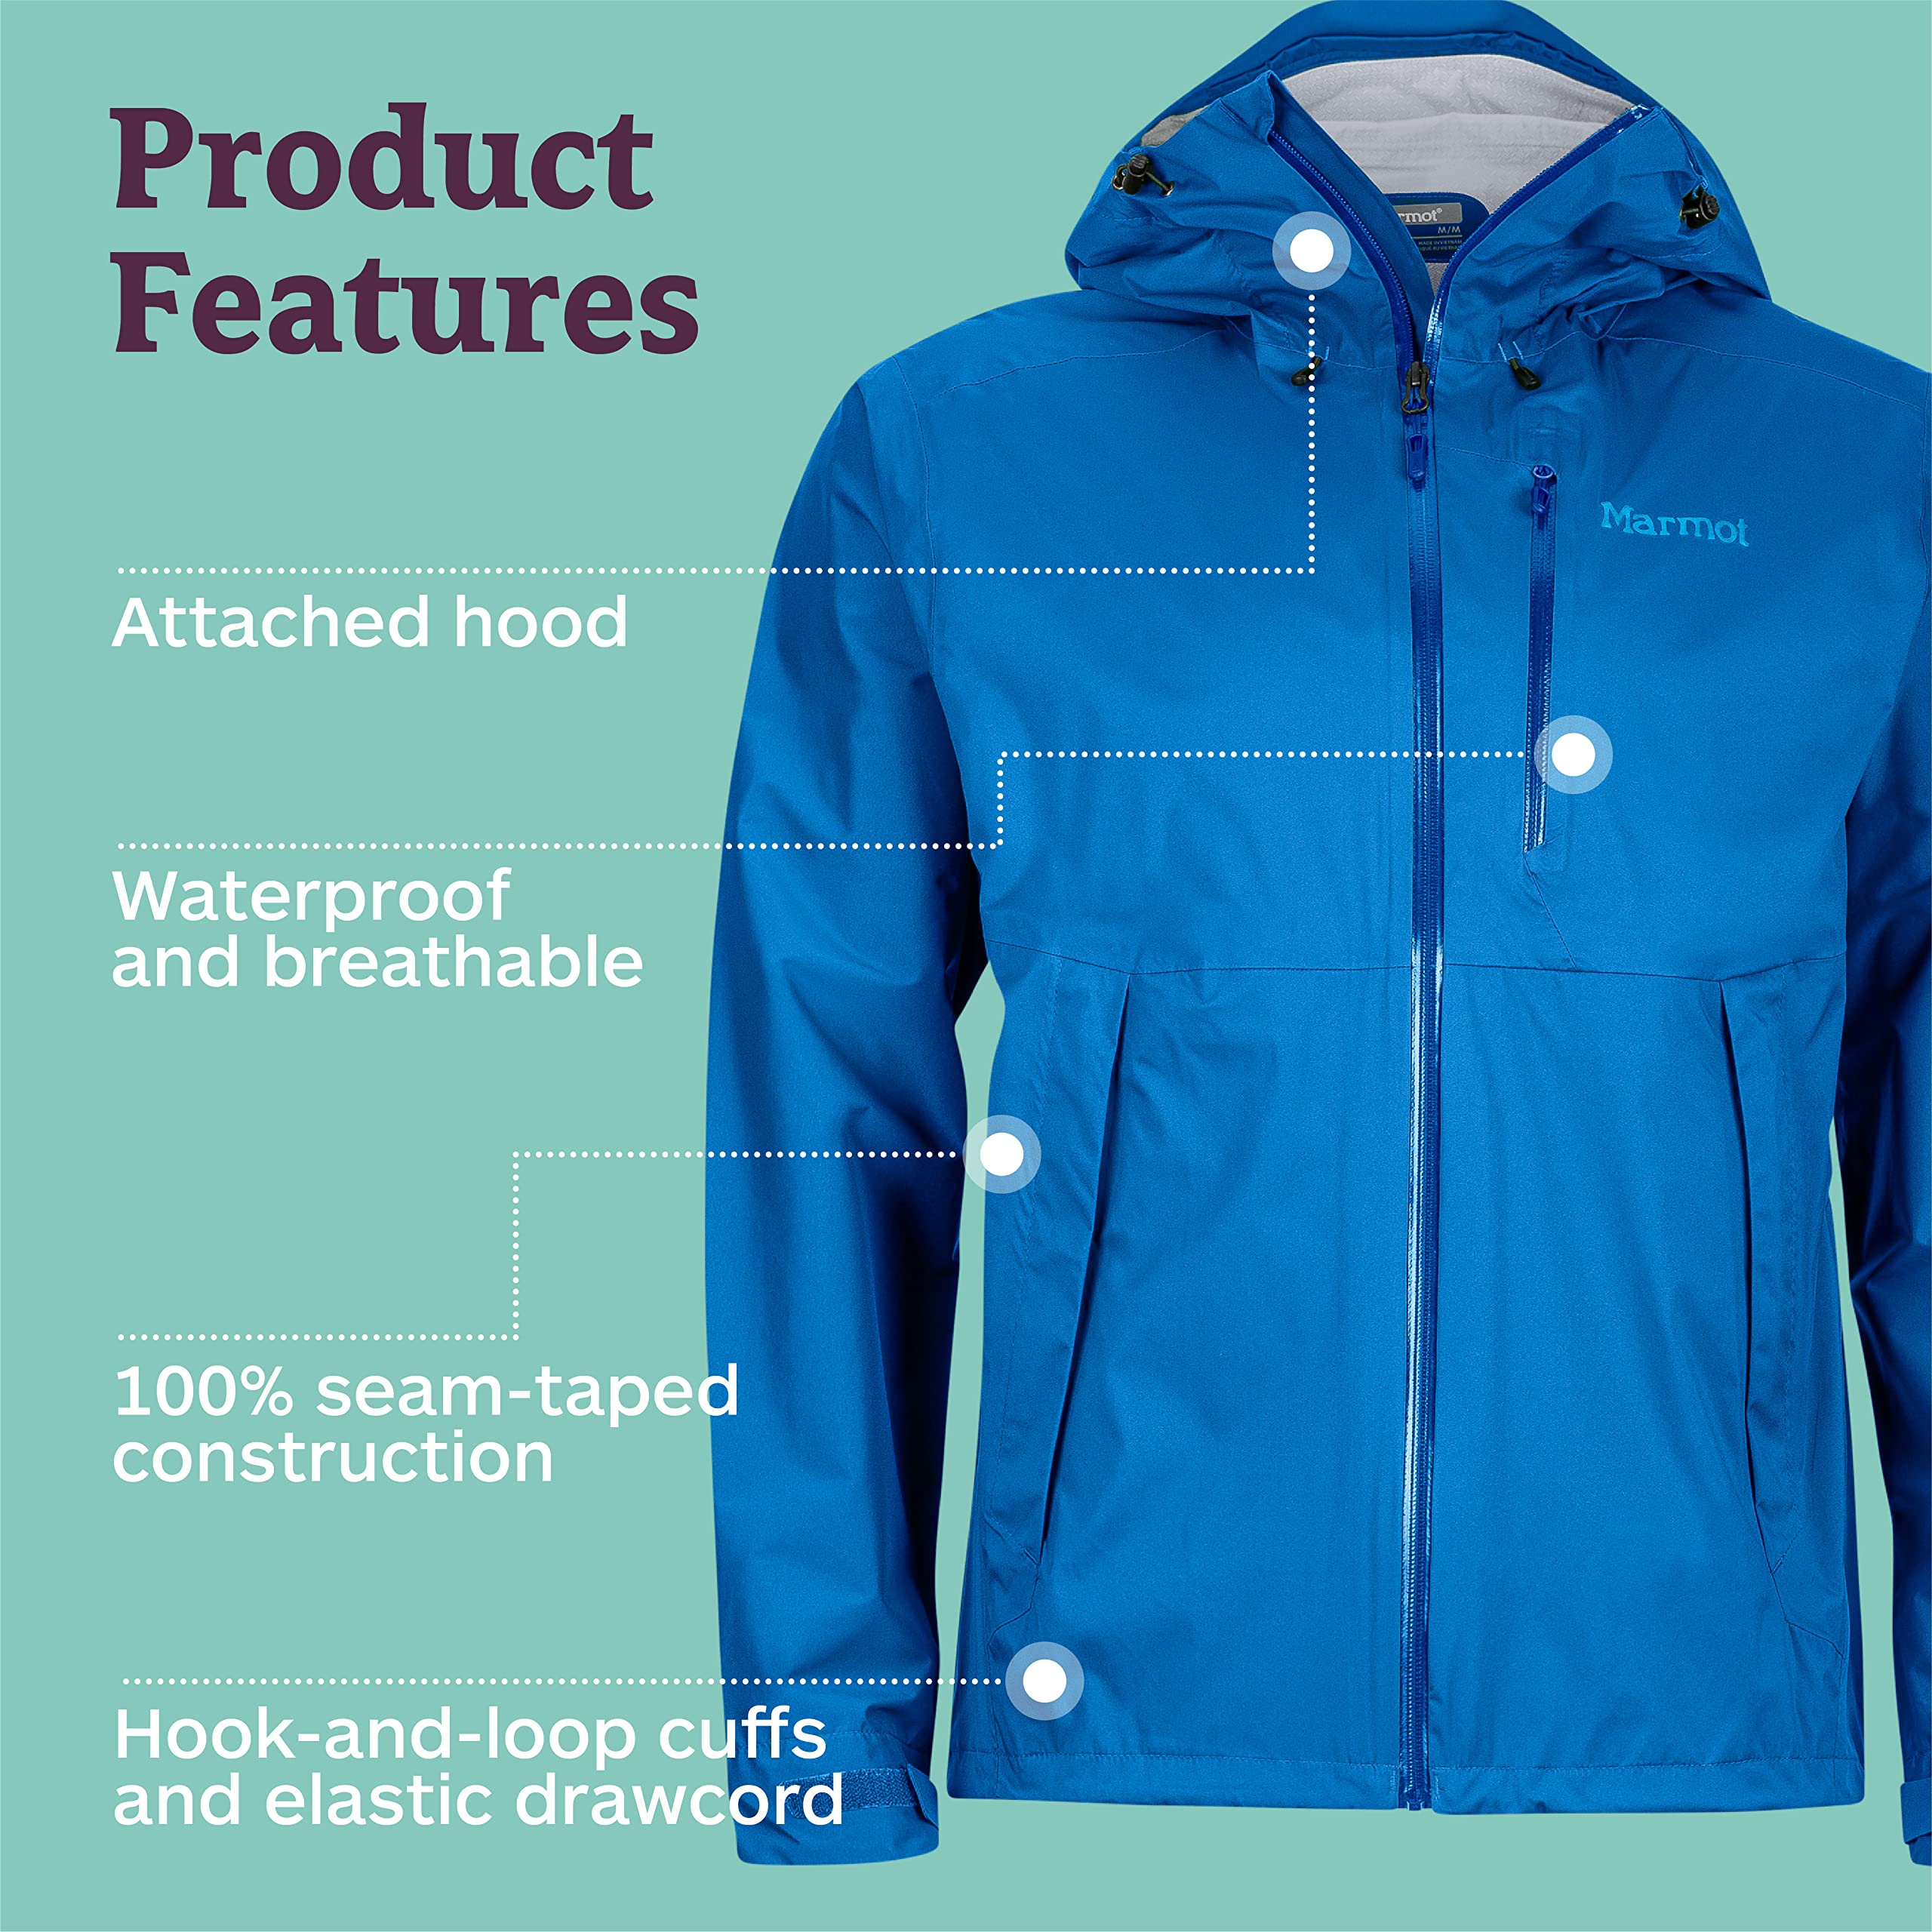 Marmot Men's Magus Lightweight Waterproof Rain Jacket